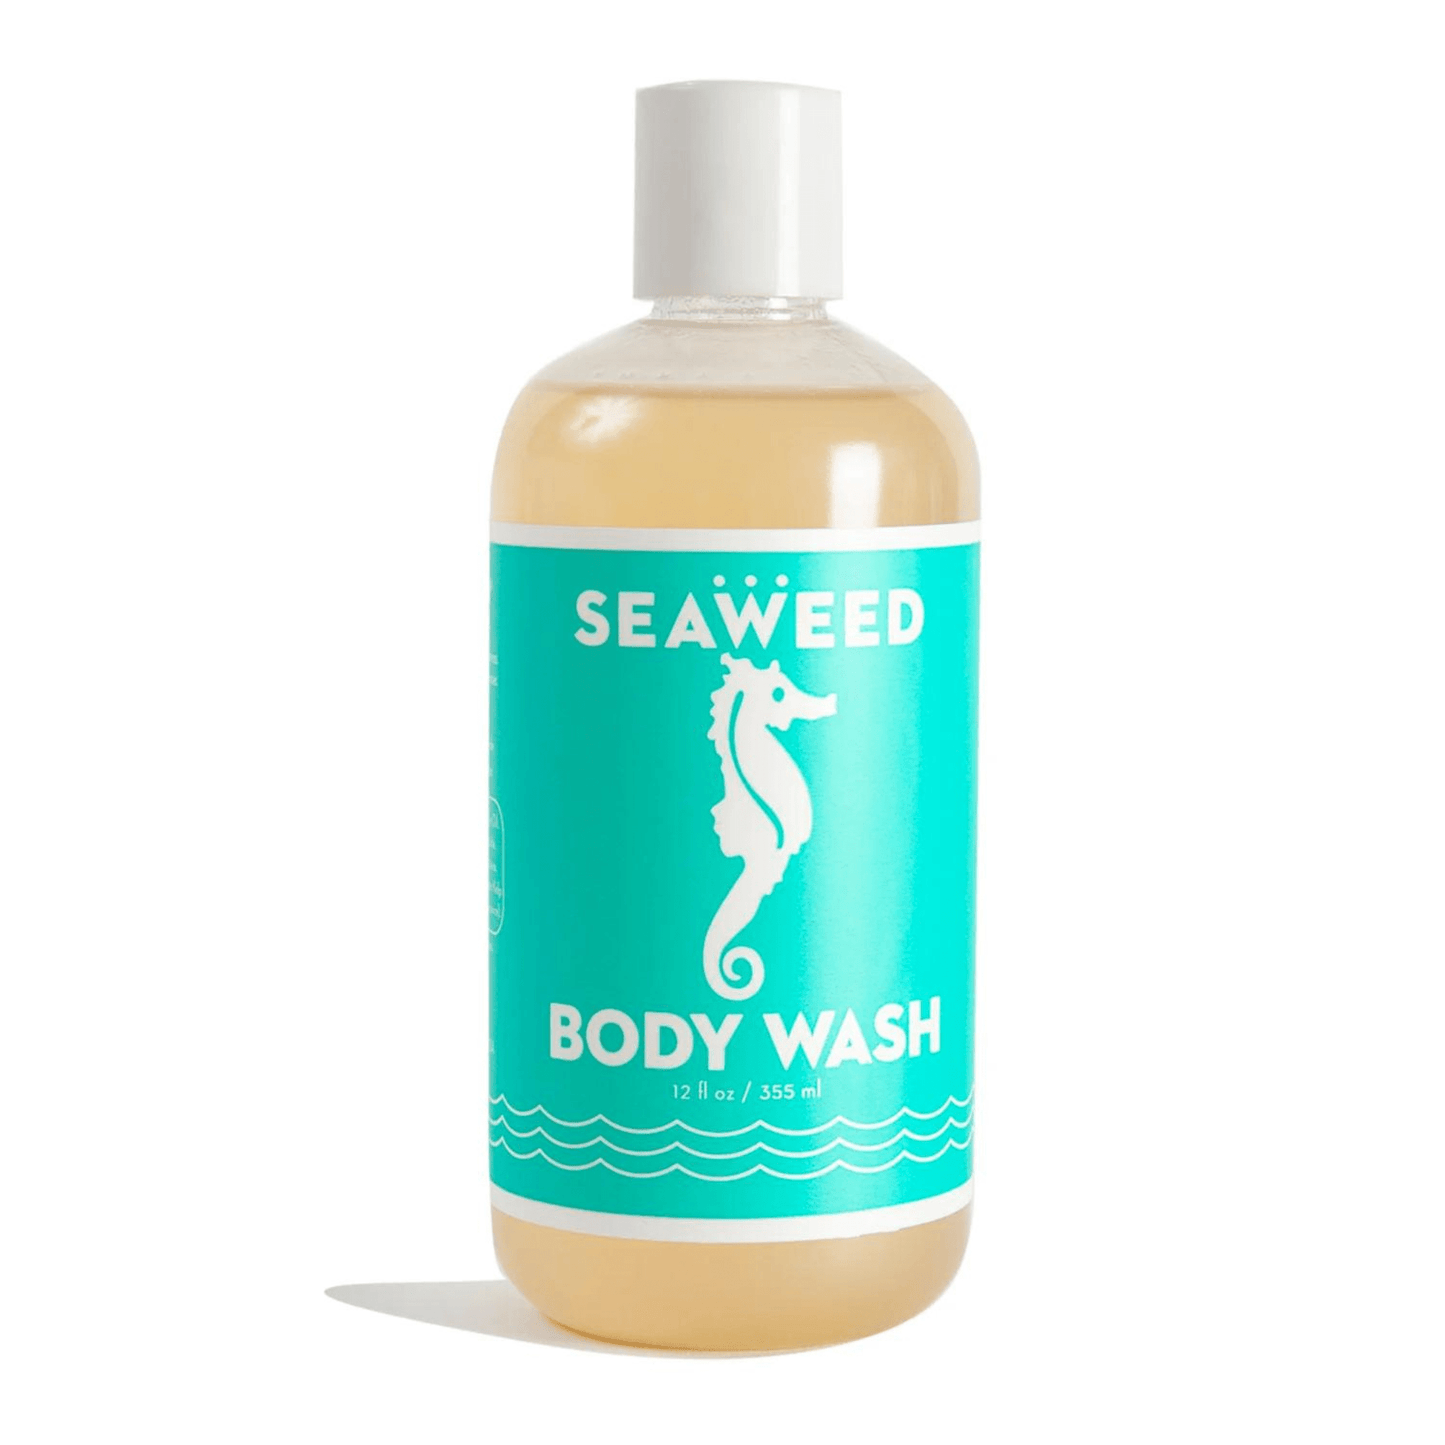 Primary Image of Seaweed Body Wash